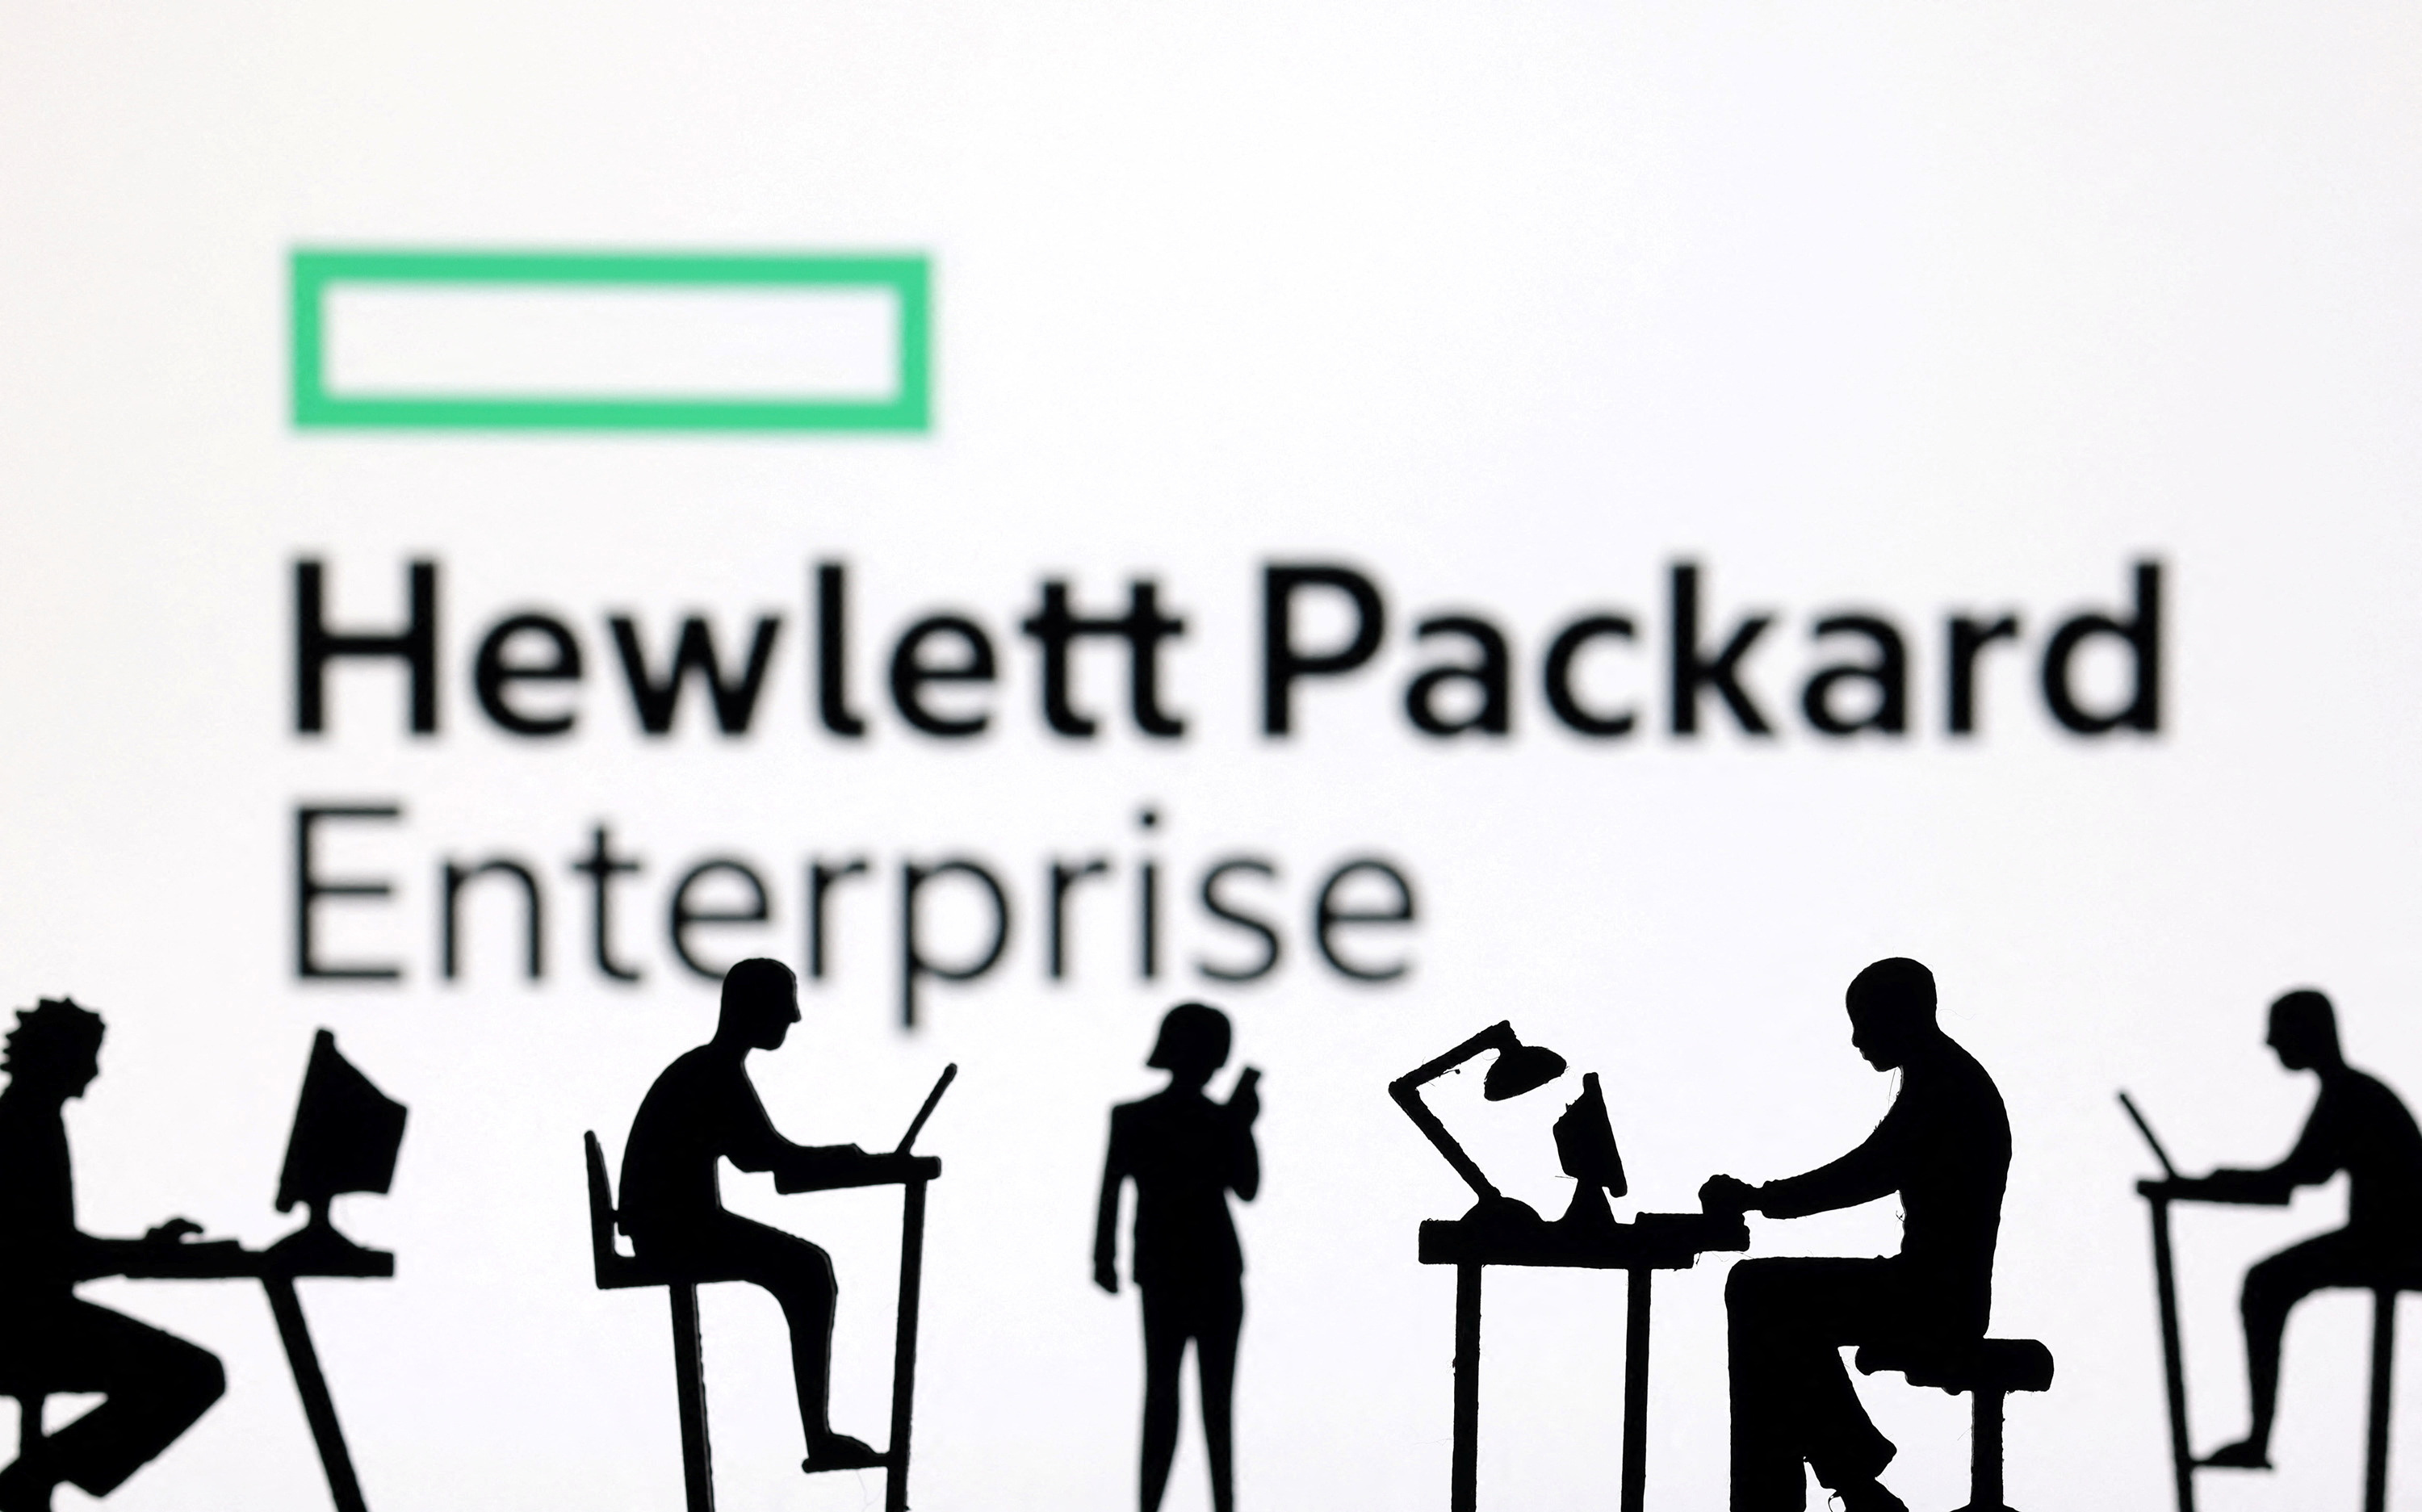 Illustration shows Hewlett Packard Enterprise logo